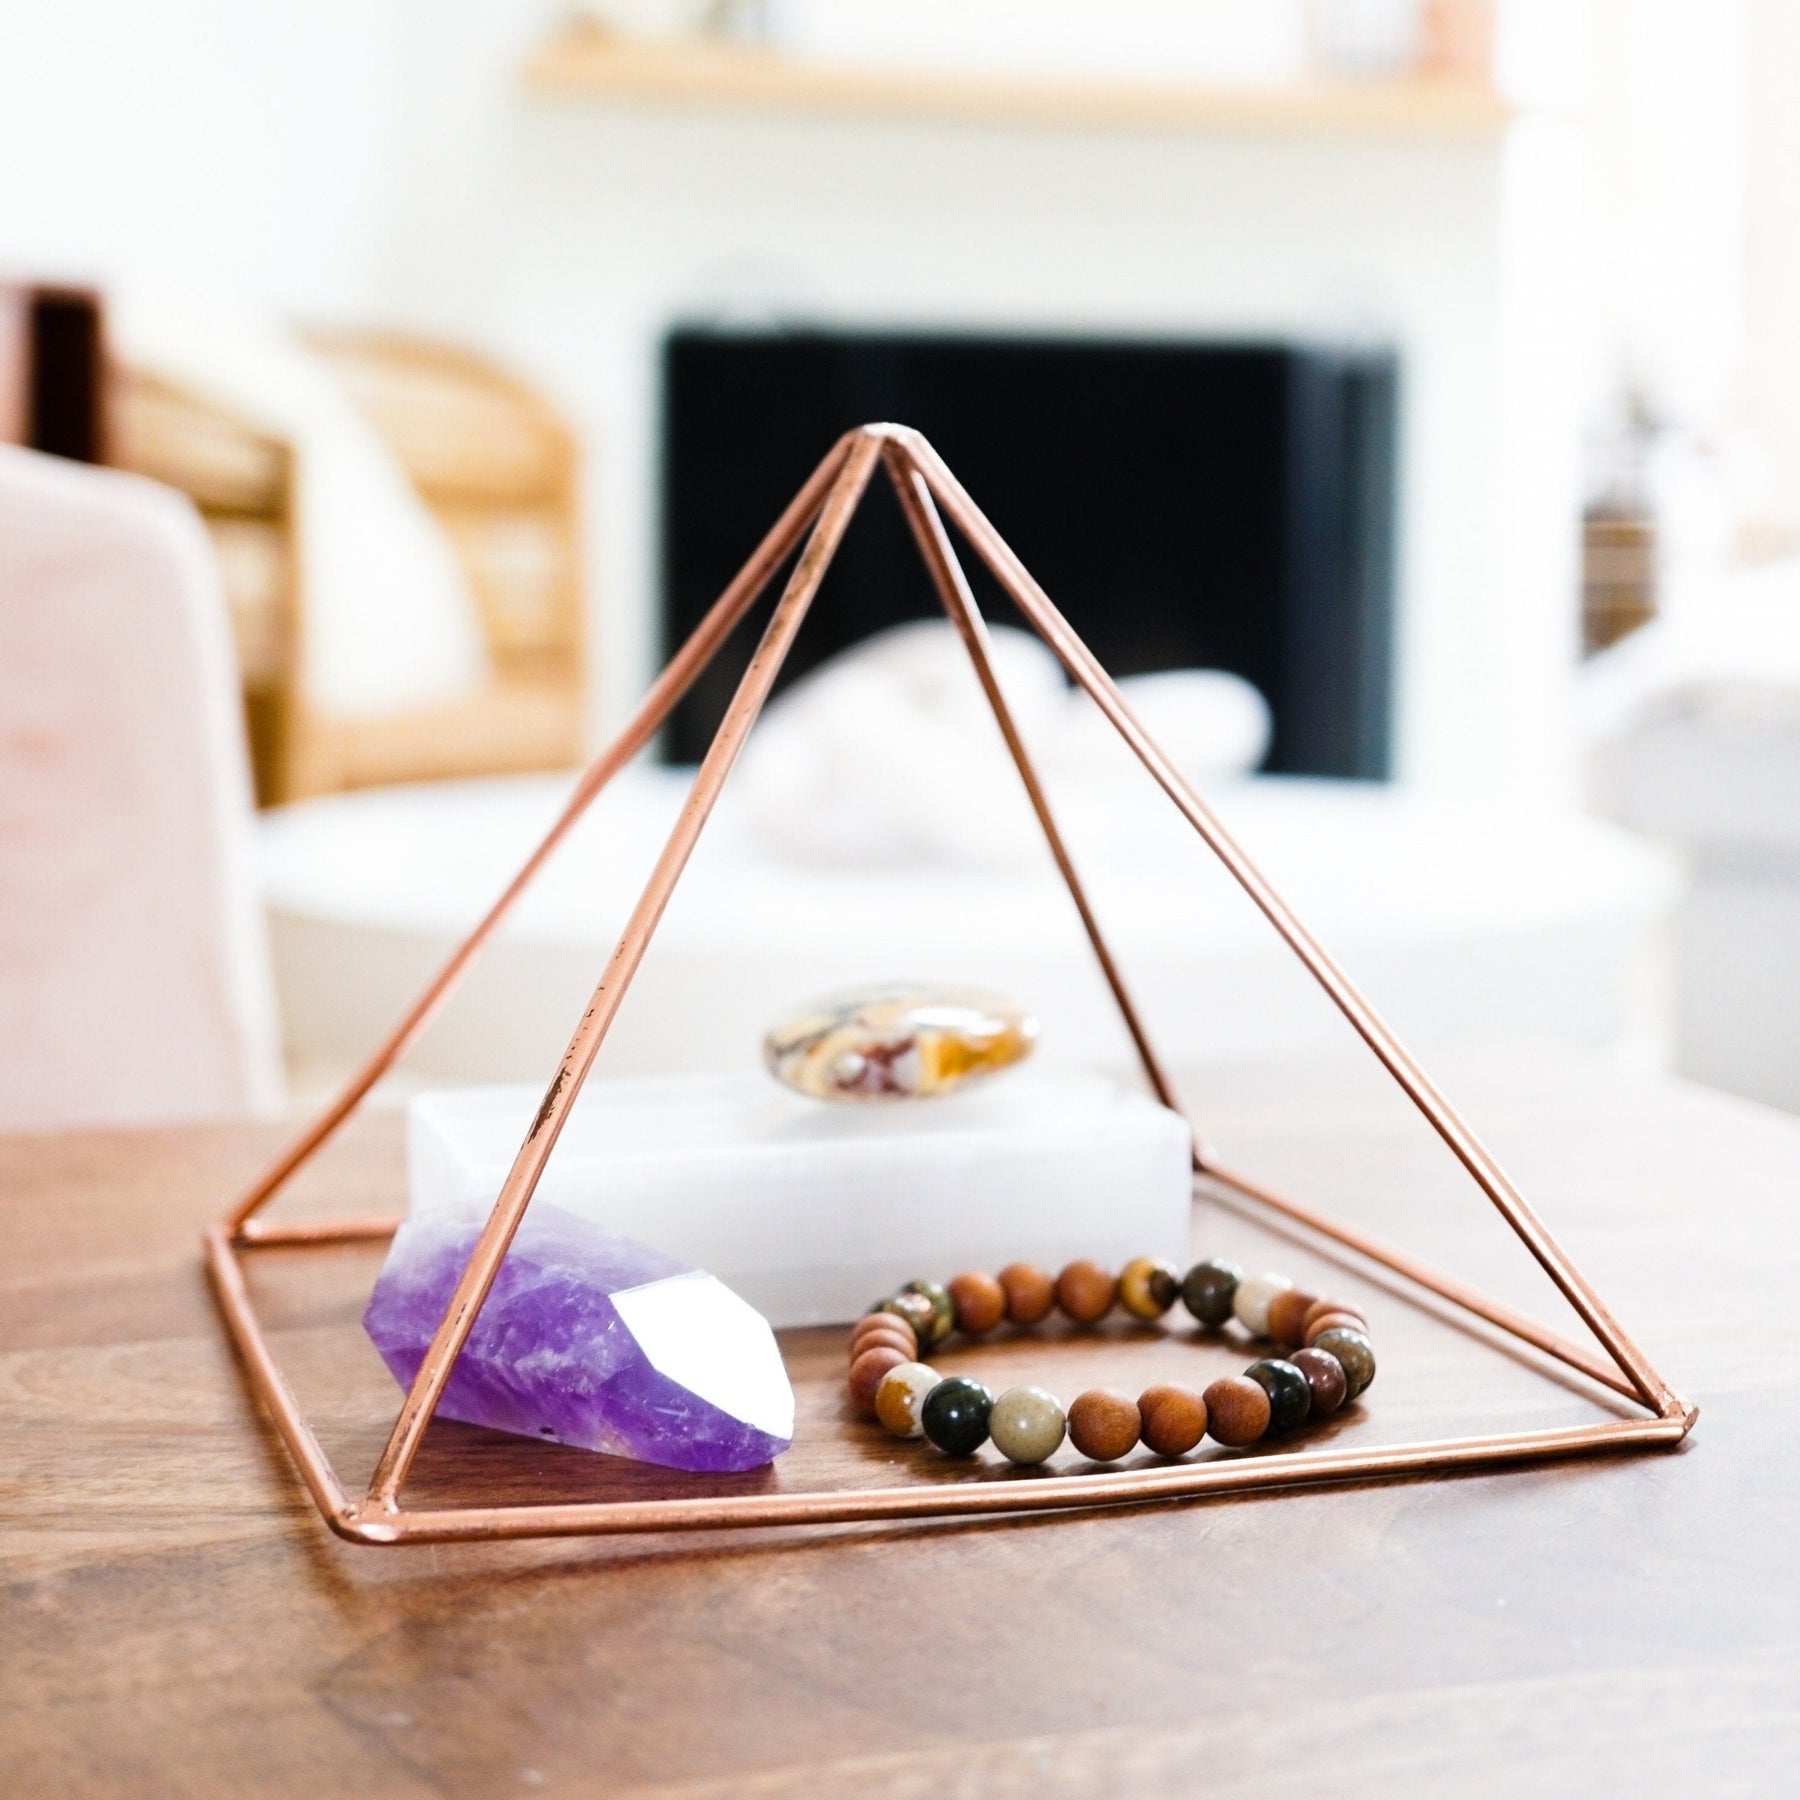 Crystal Healing Copper Pyramid, High Quality Copper Pyramid